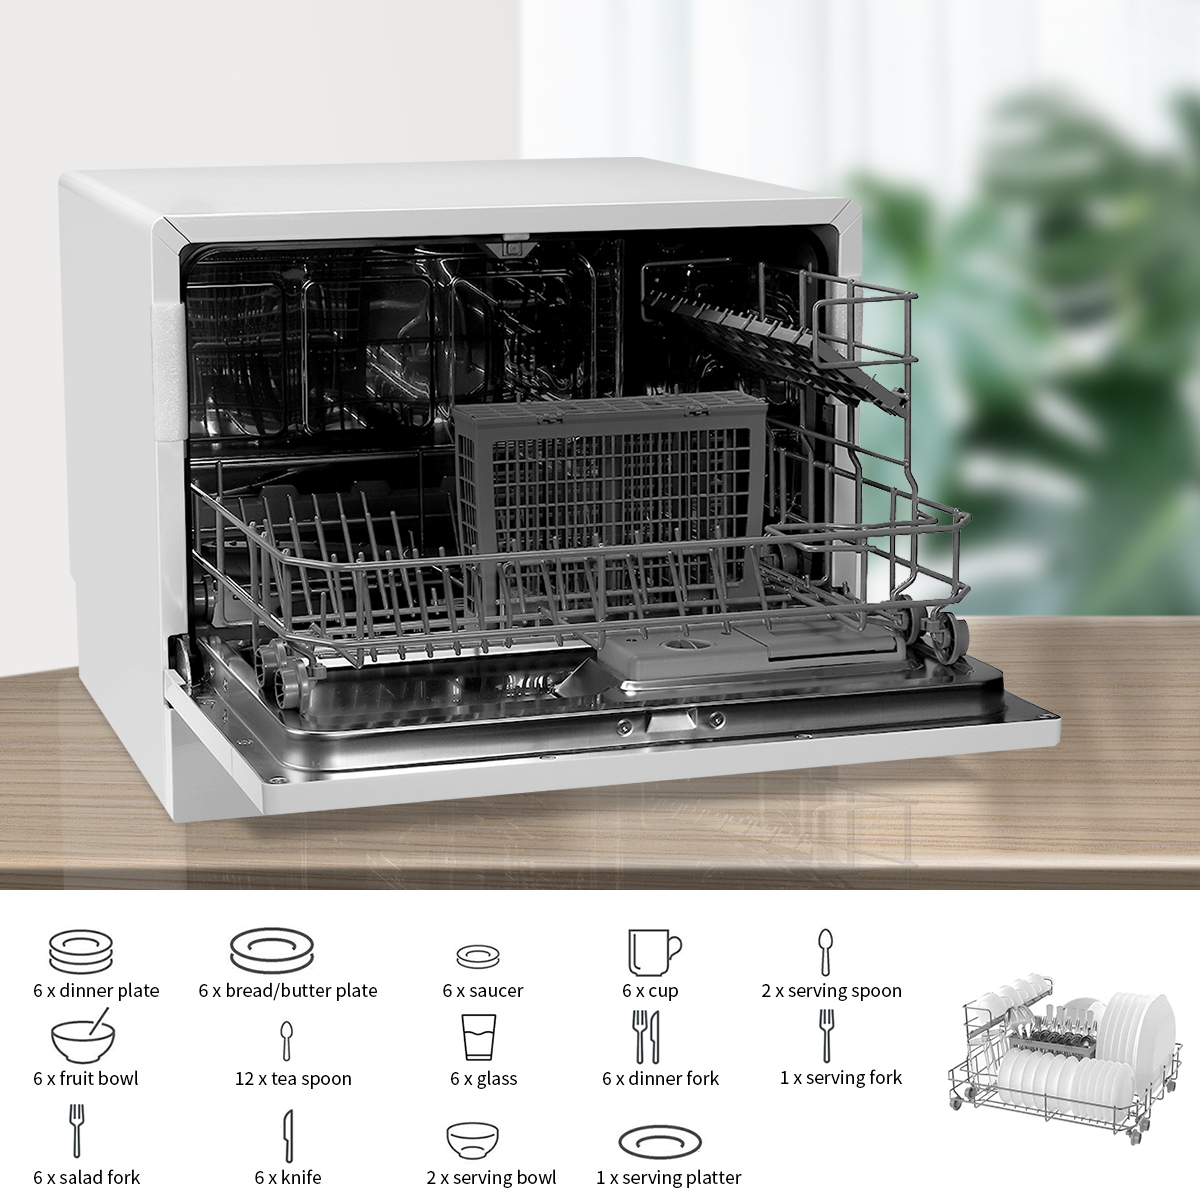 Warmto-6-Piece-Countertop-Dishwasher-Counter-Top-Dishwasher-Machine-Delay-Start-LED-Display-5-Washin-1931541-15